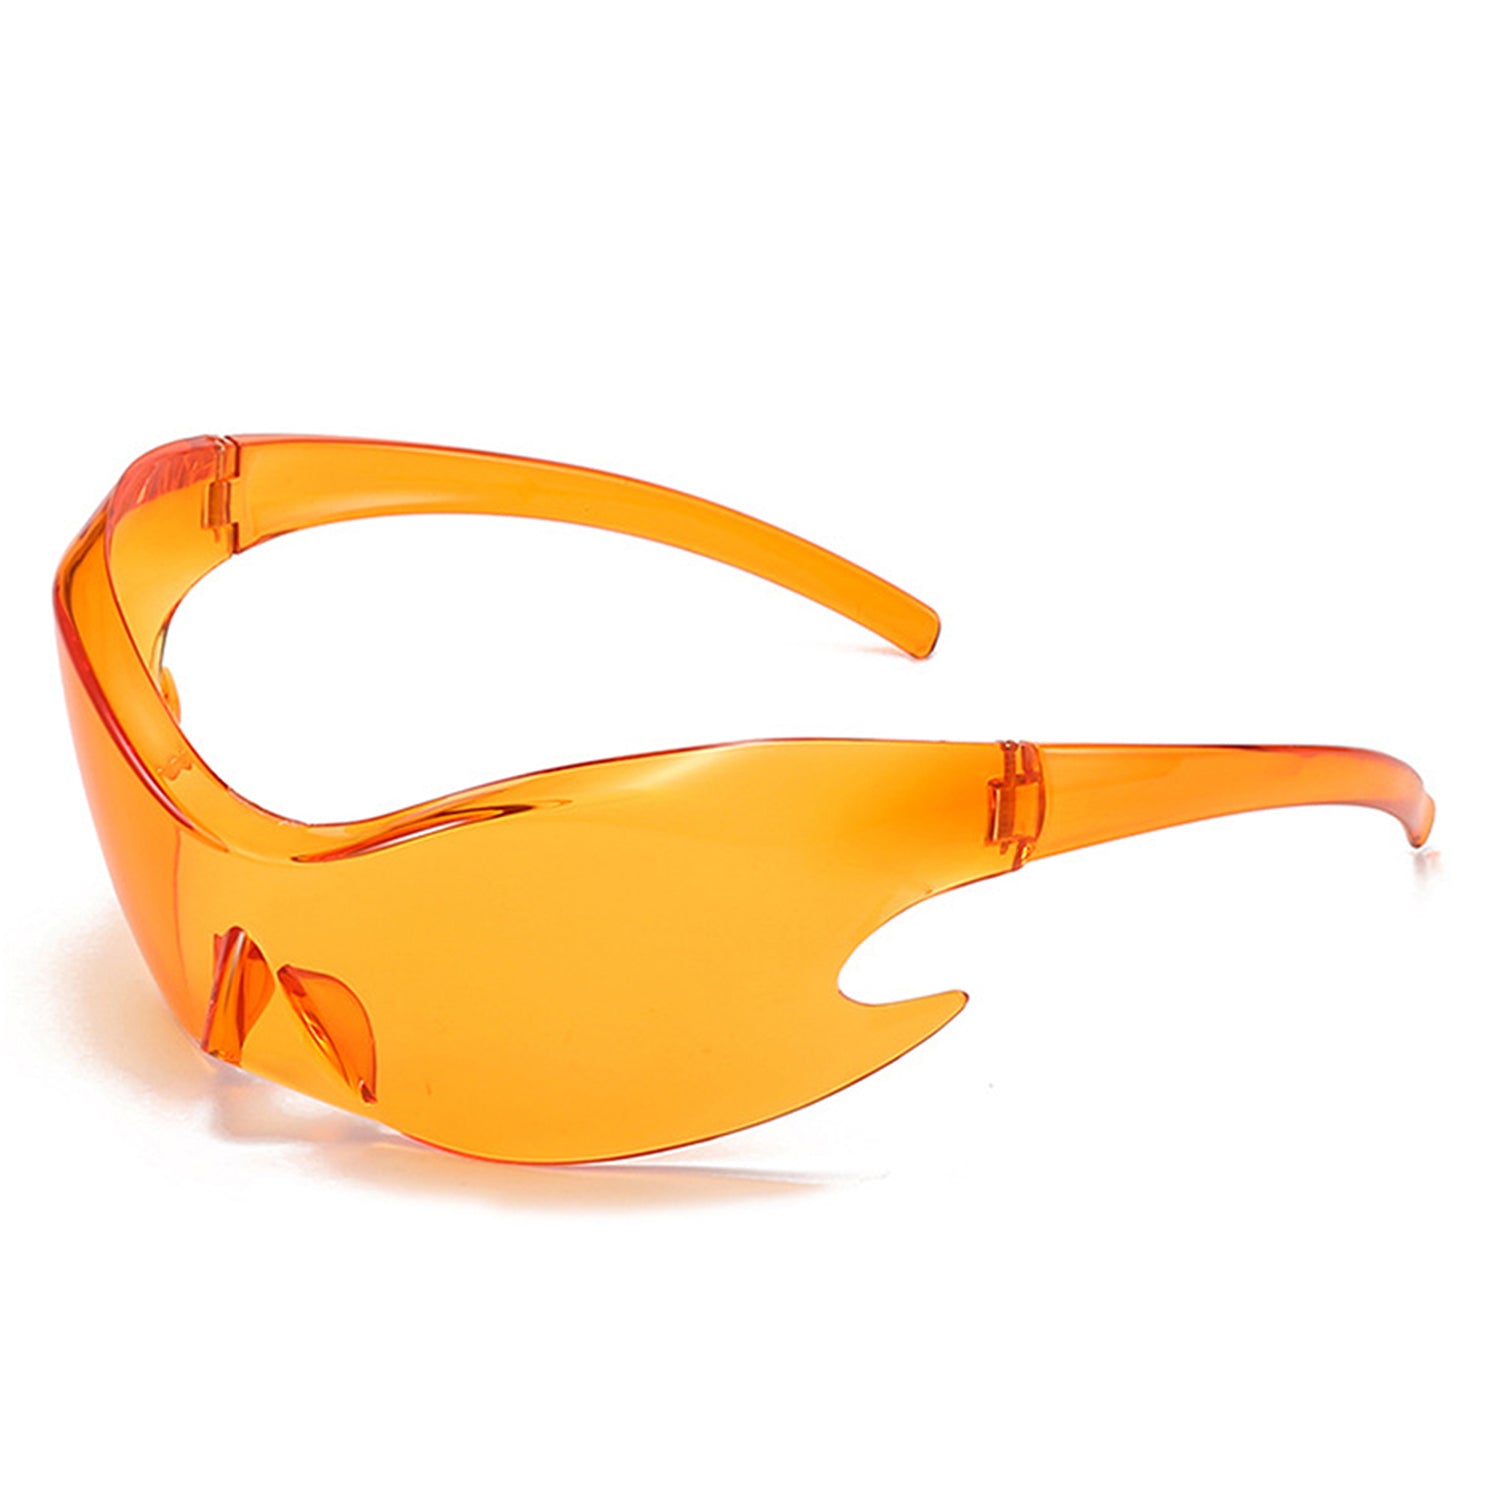 Whiestan - Futuristic Mirrored Sleek Wrap Around Sports Sunglasses Orange